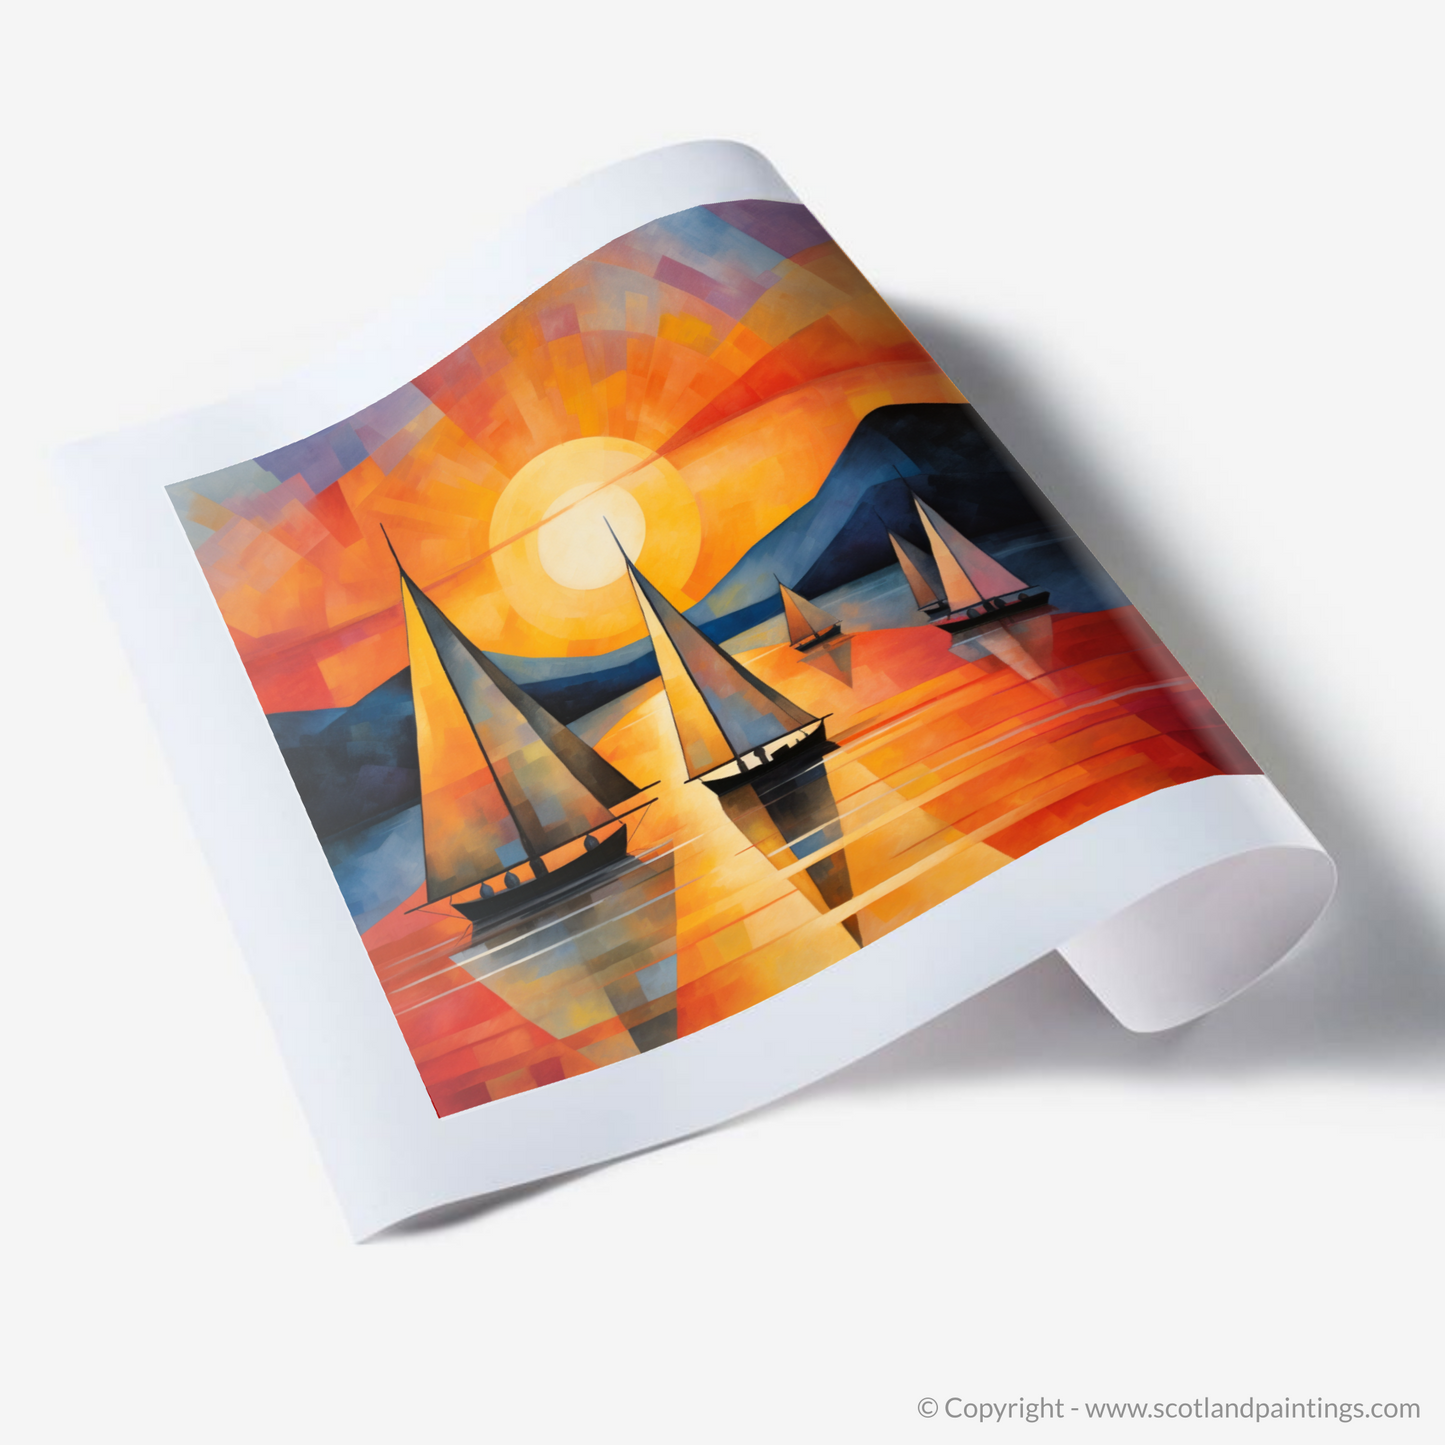 Art Print of Sailing boats on Loch Lomond at sunset